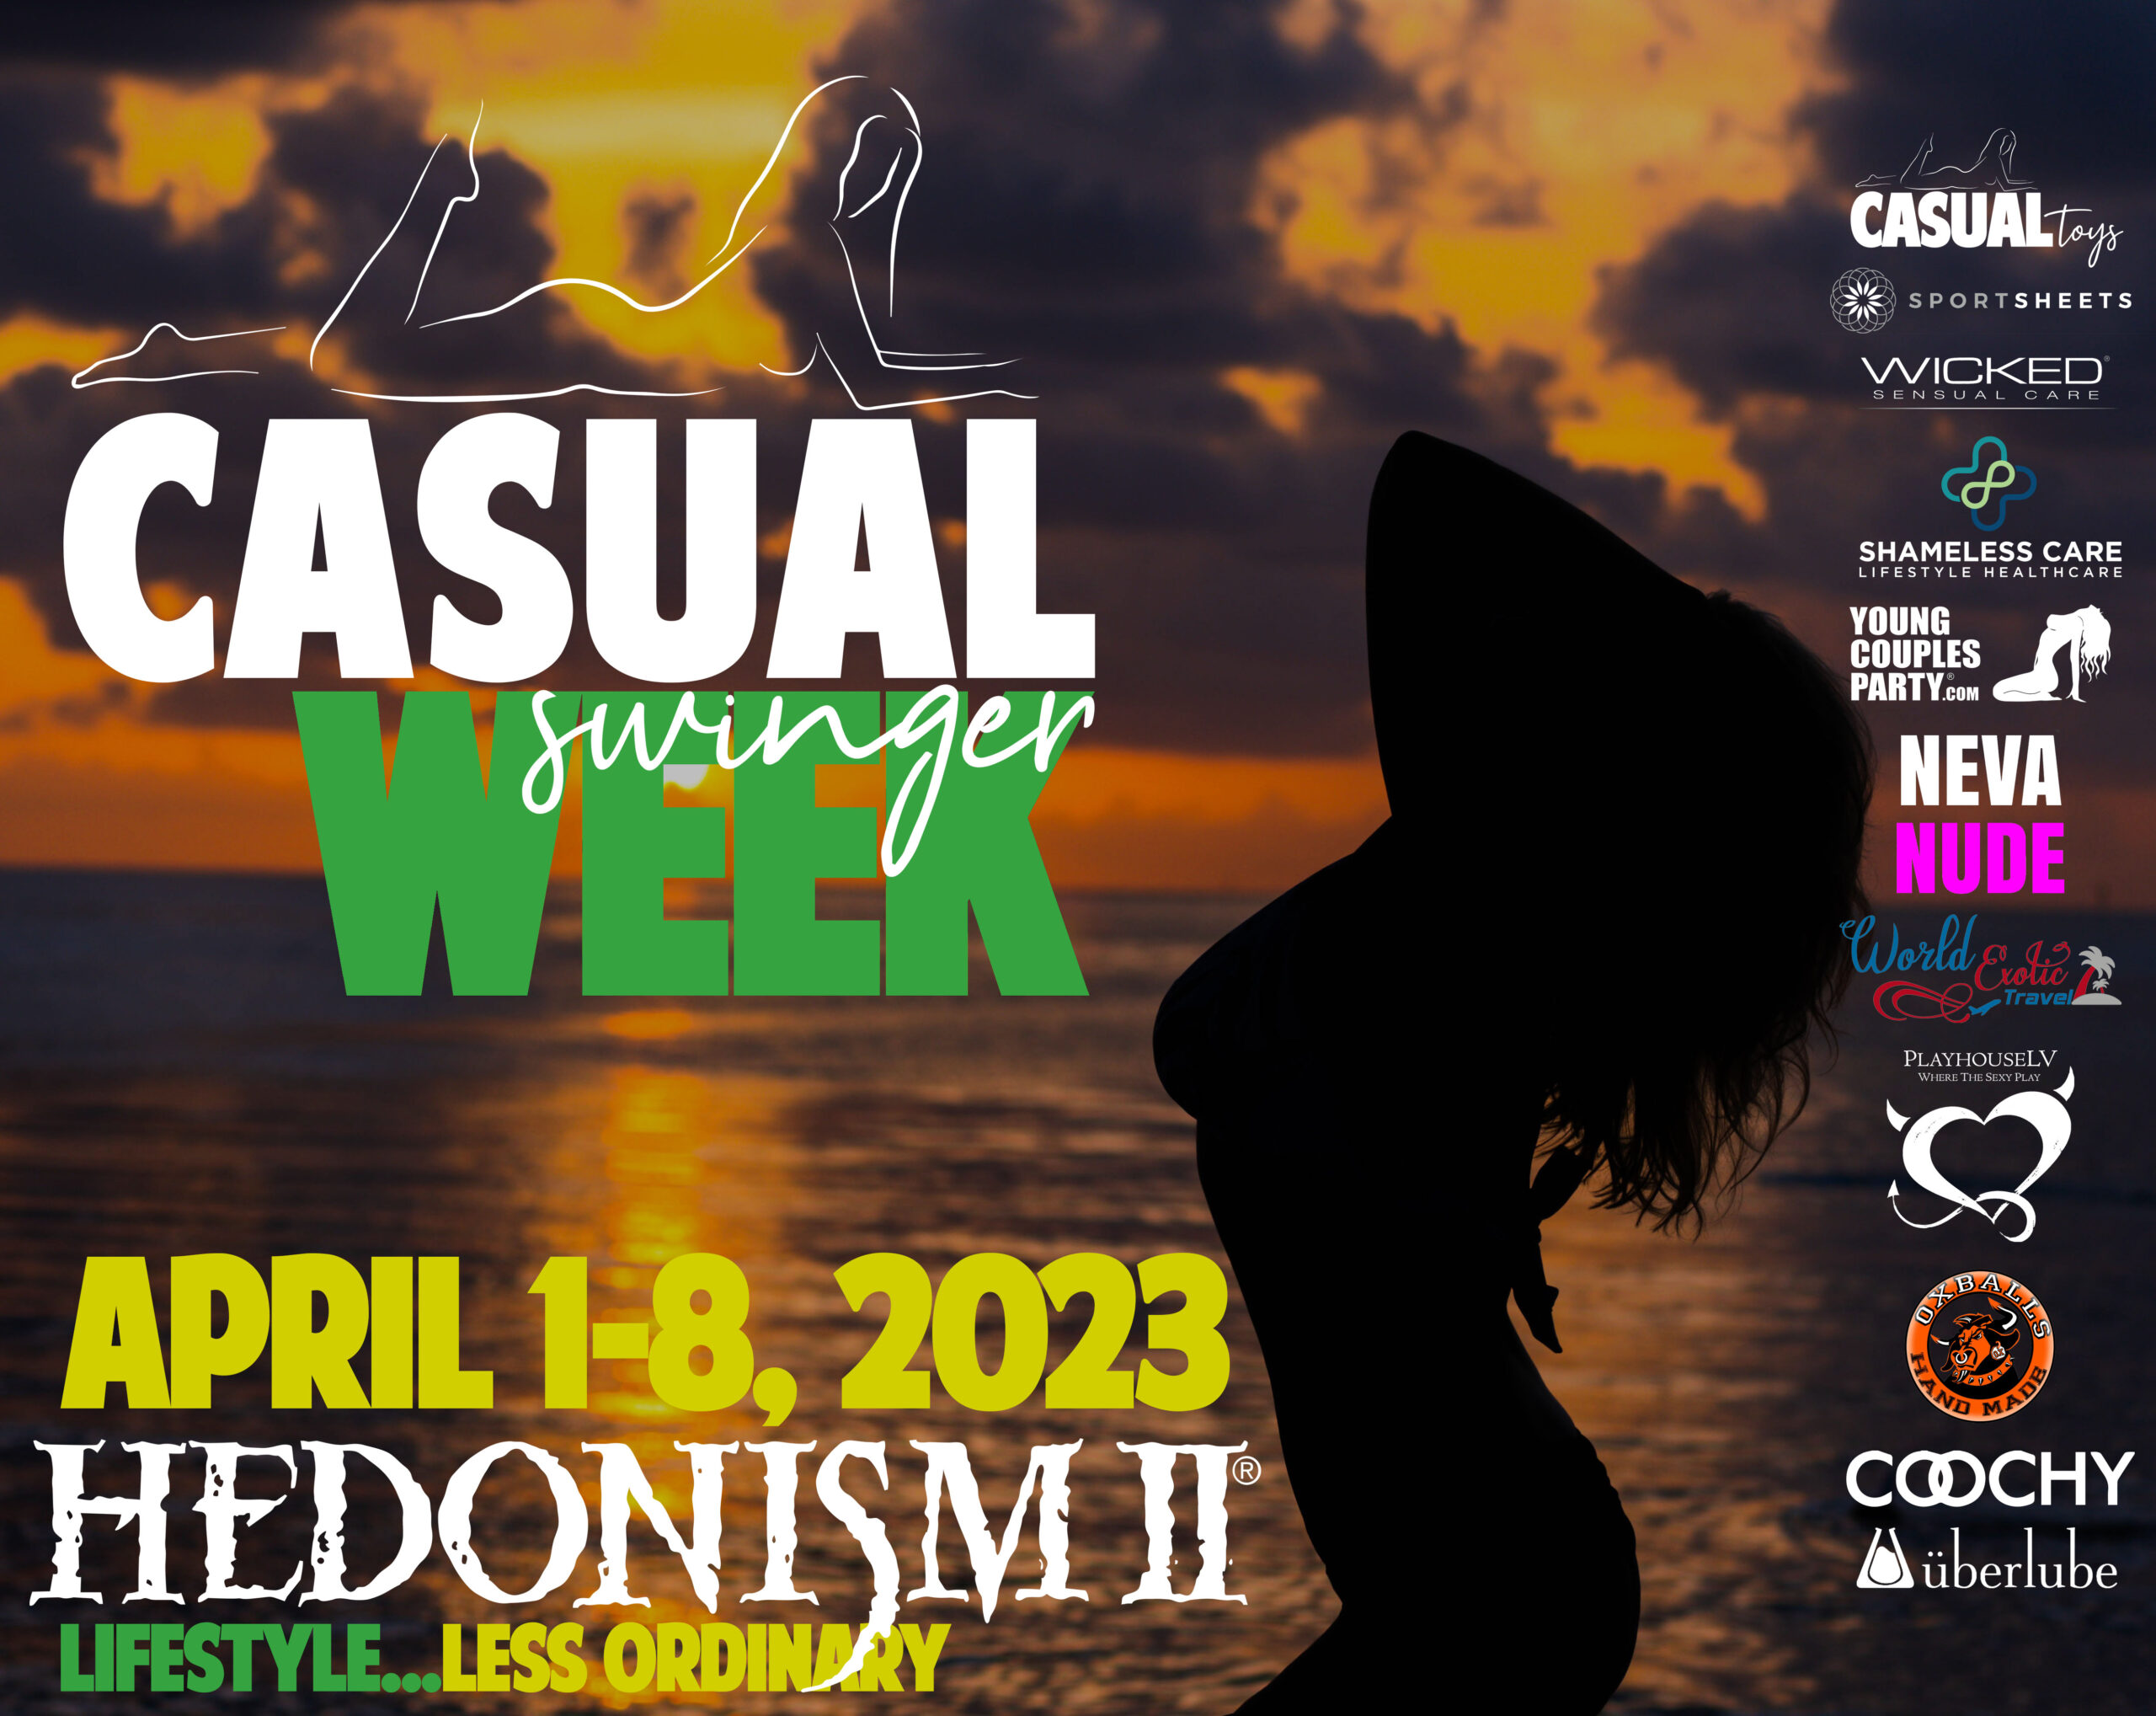 Sponsors & Dates for Casual Swinger Week @ Hedonism II